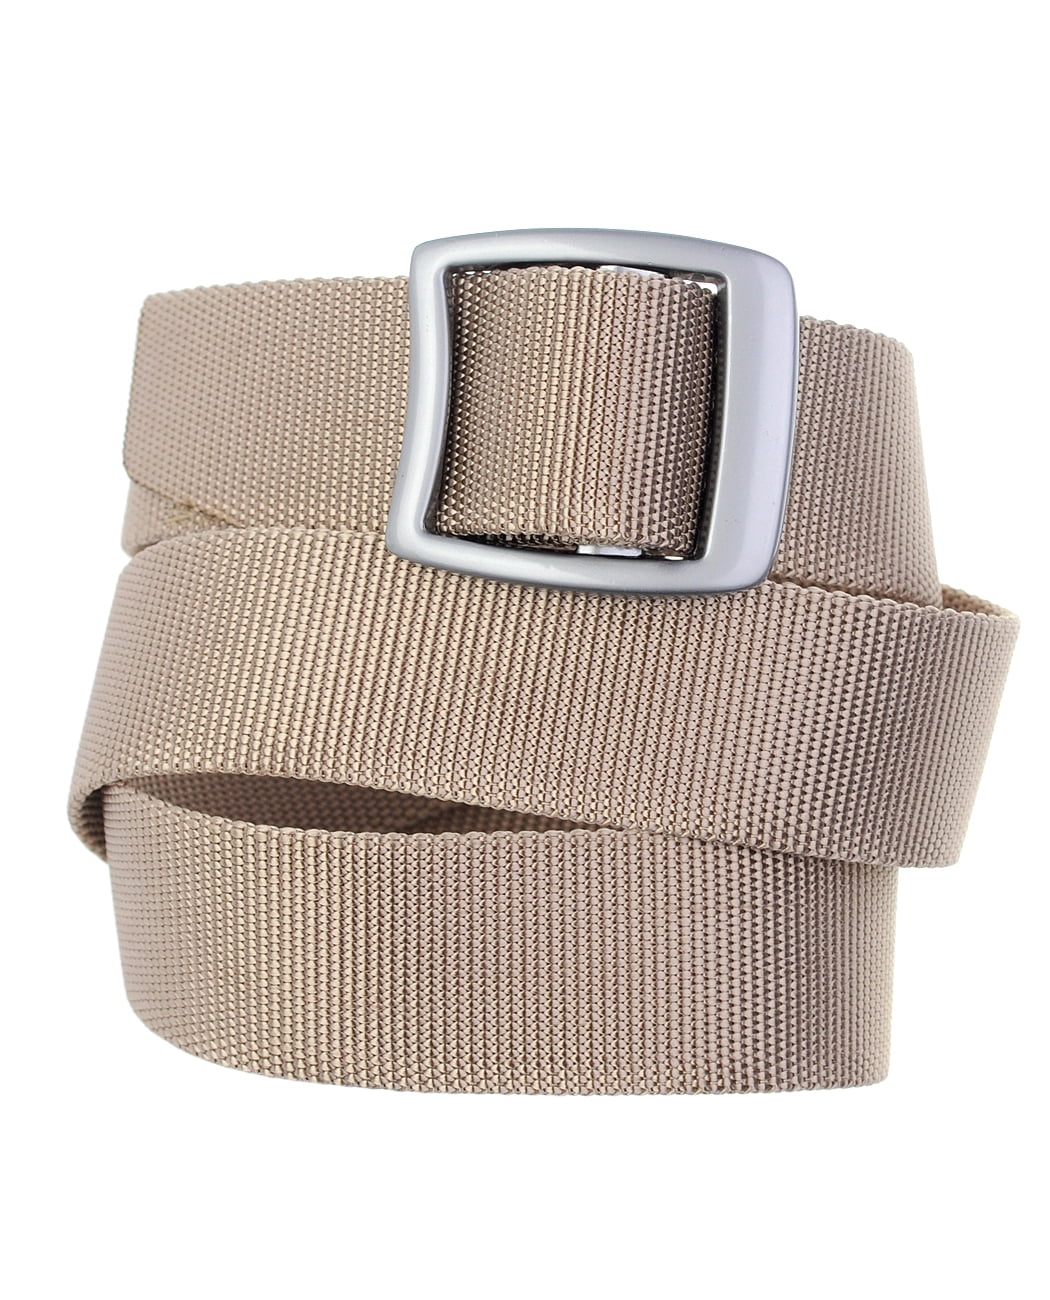 squaregarden Nylon Tactical Duty Belts for Men D-ring Buckle Webbing Military Belt 